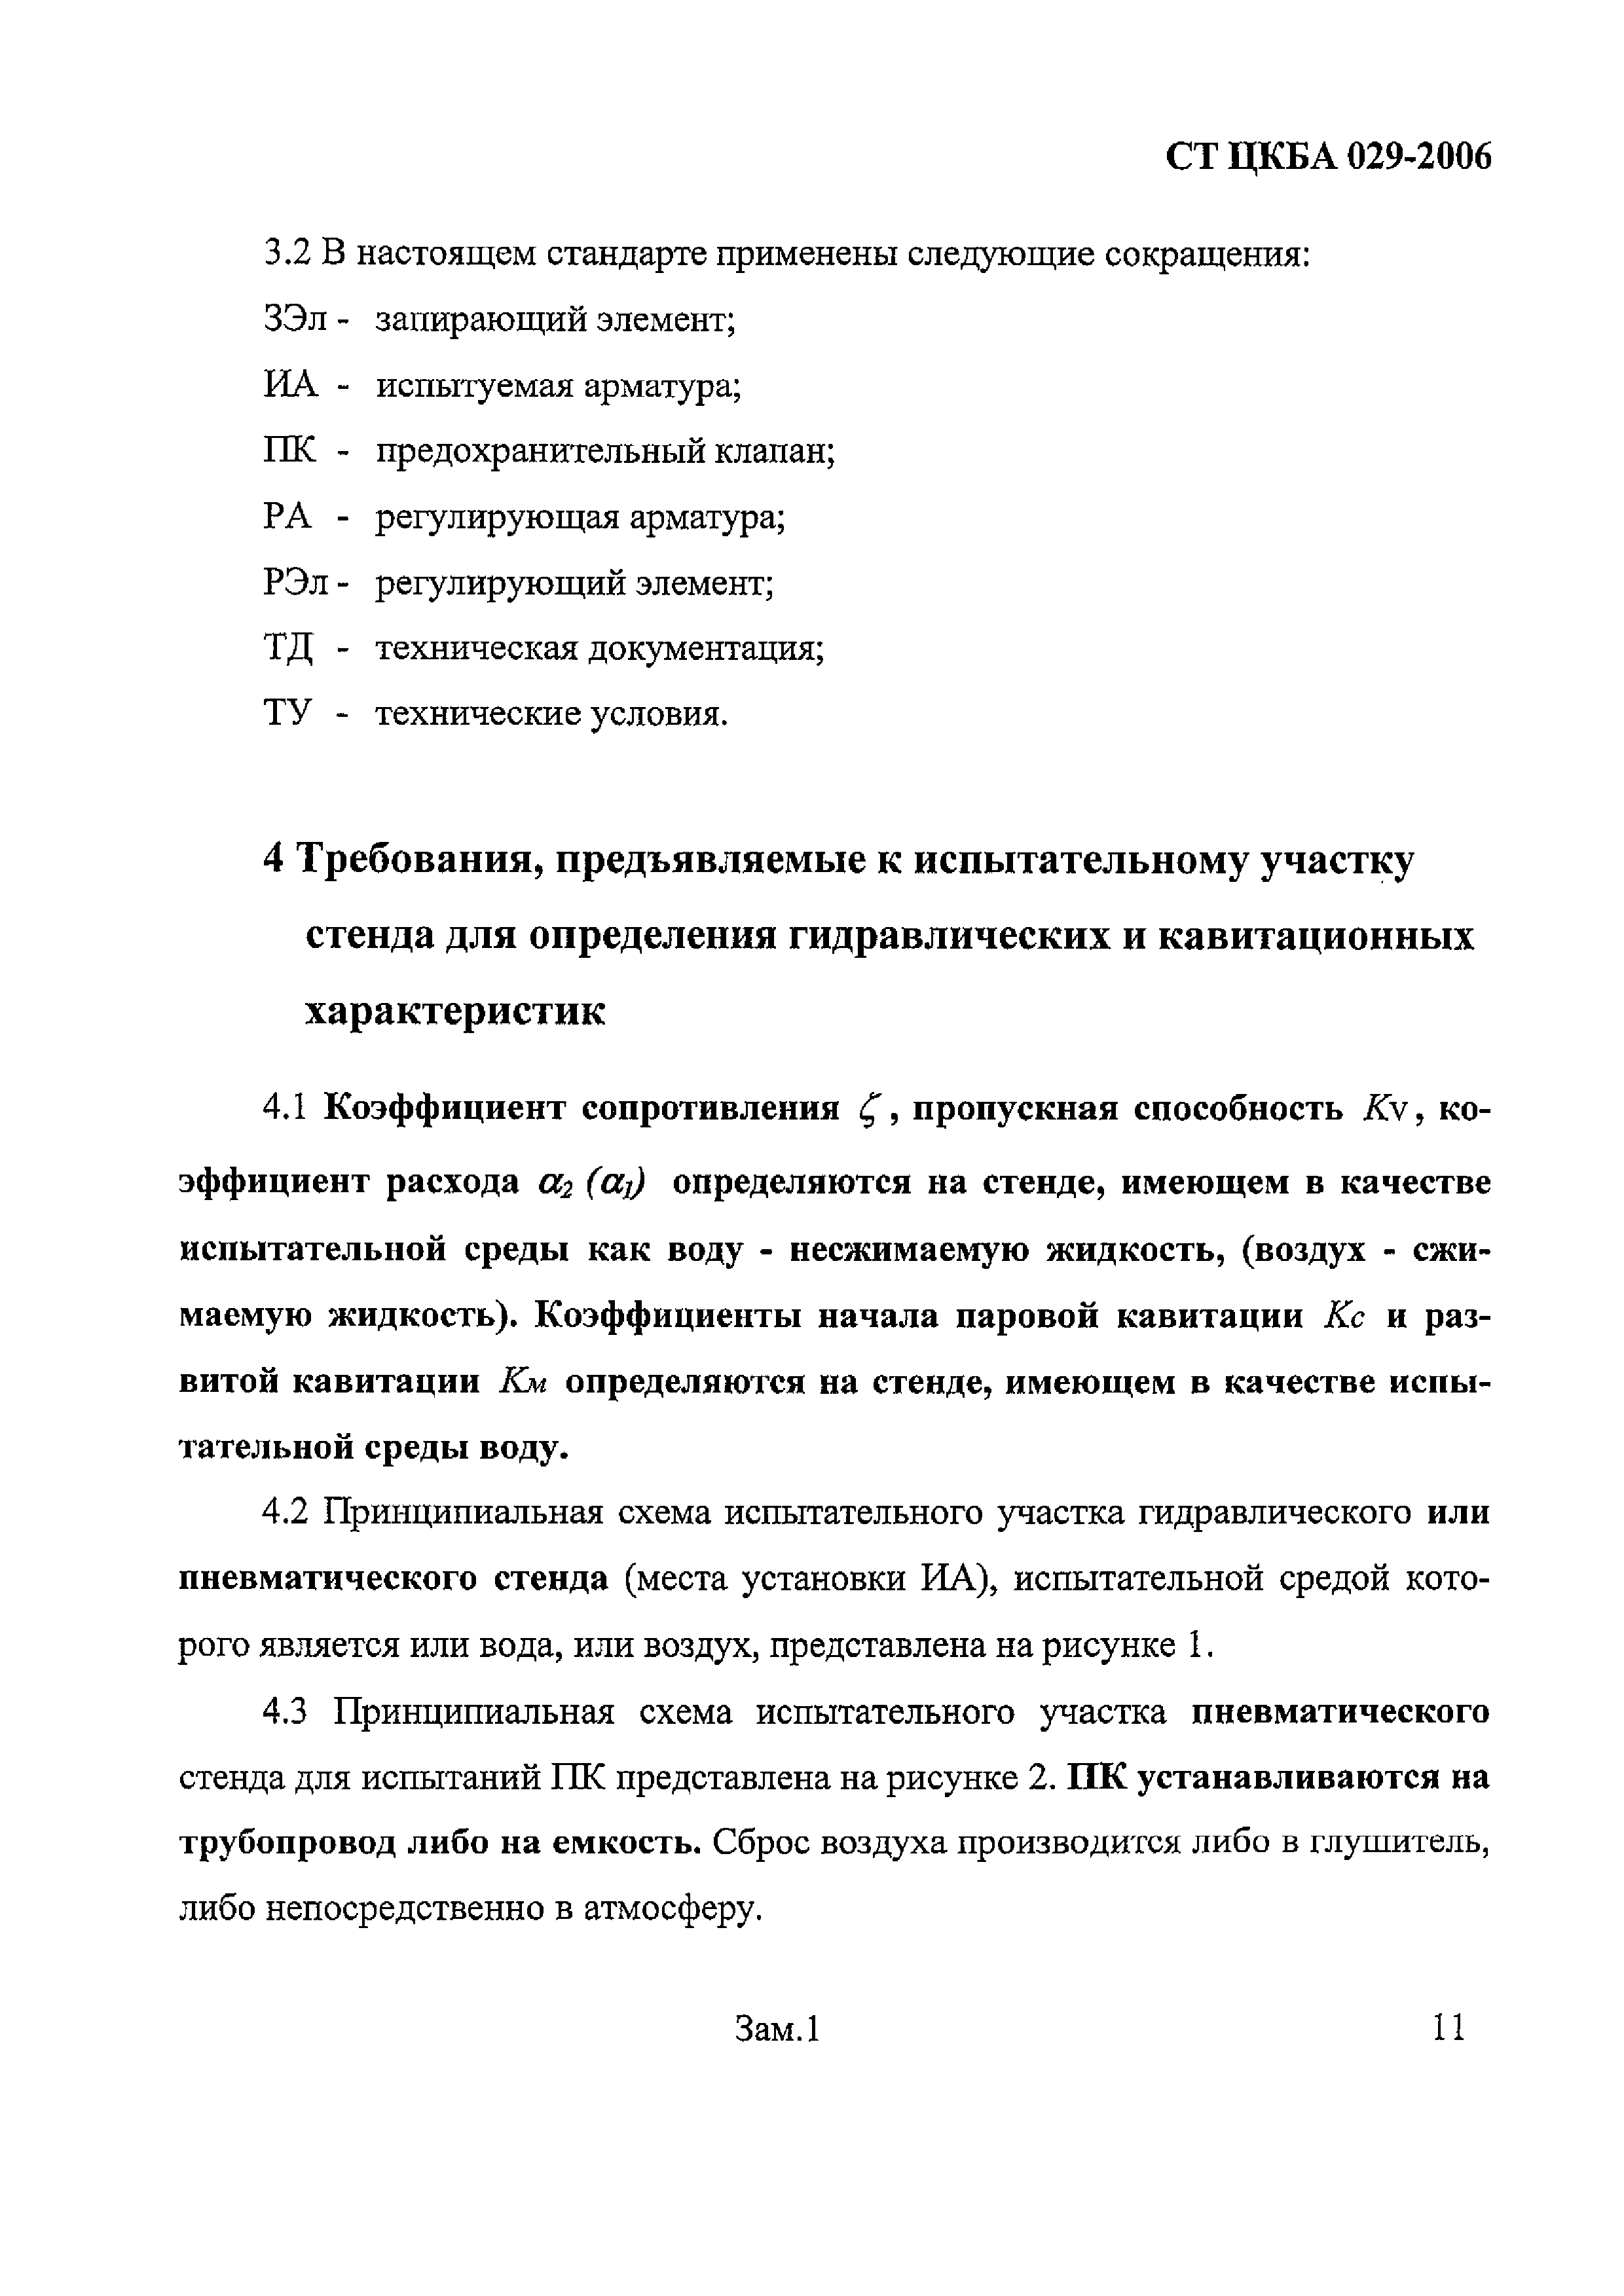 СТ ЦКБА 029-2006